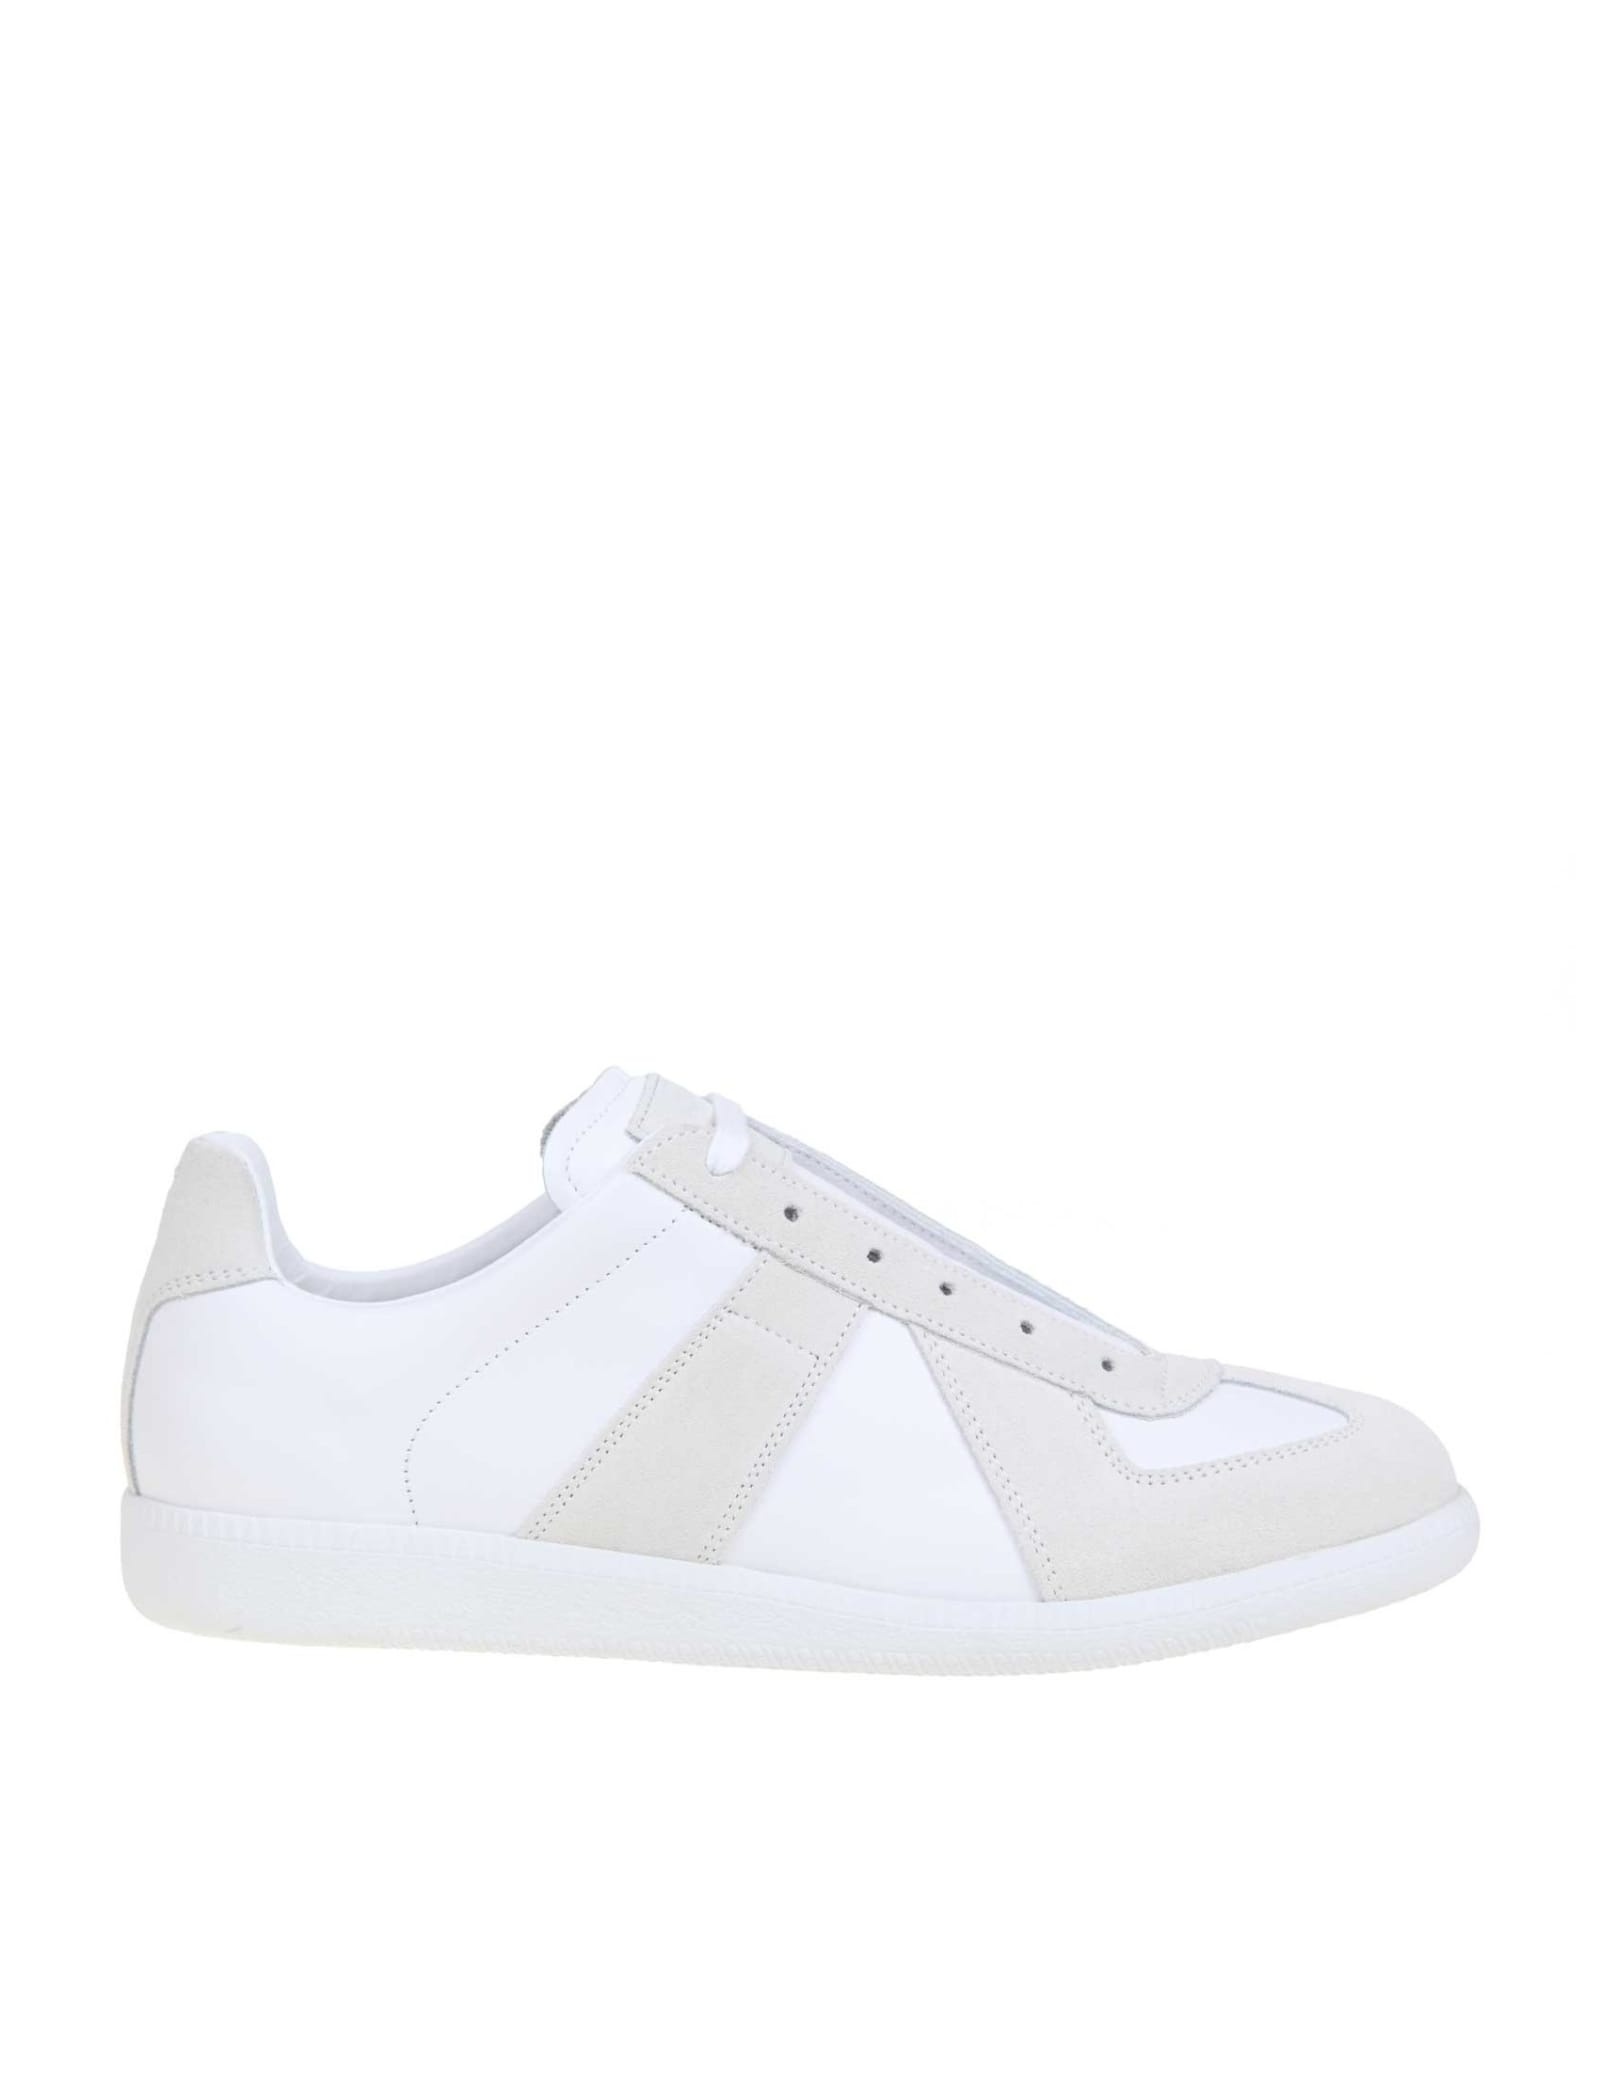 Maison Margiela Replica Sneakers In White Leather